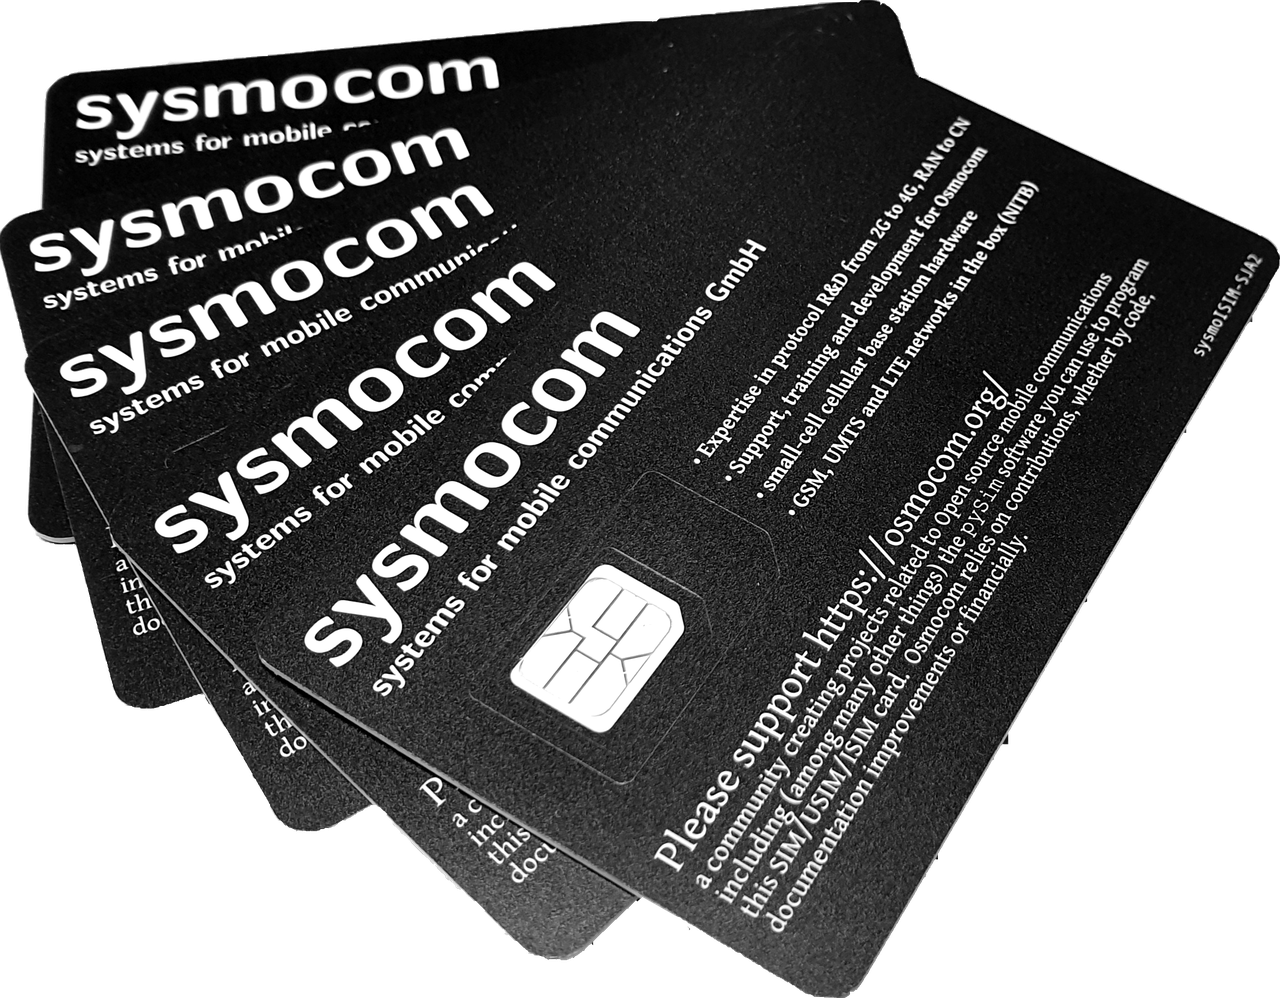 sysmocom SIM cards